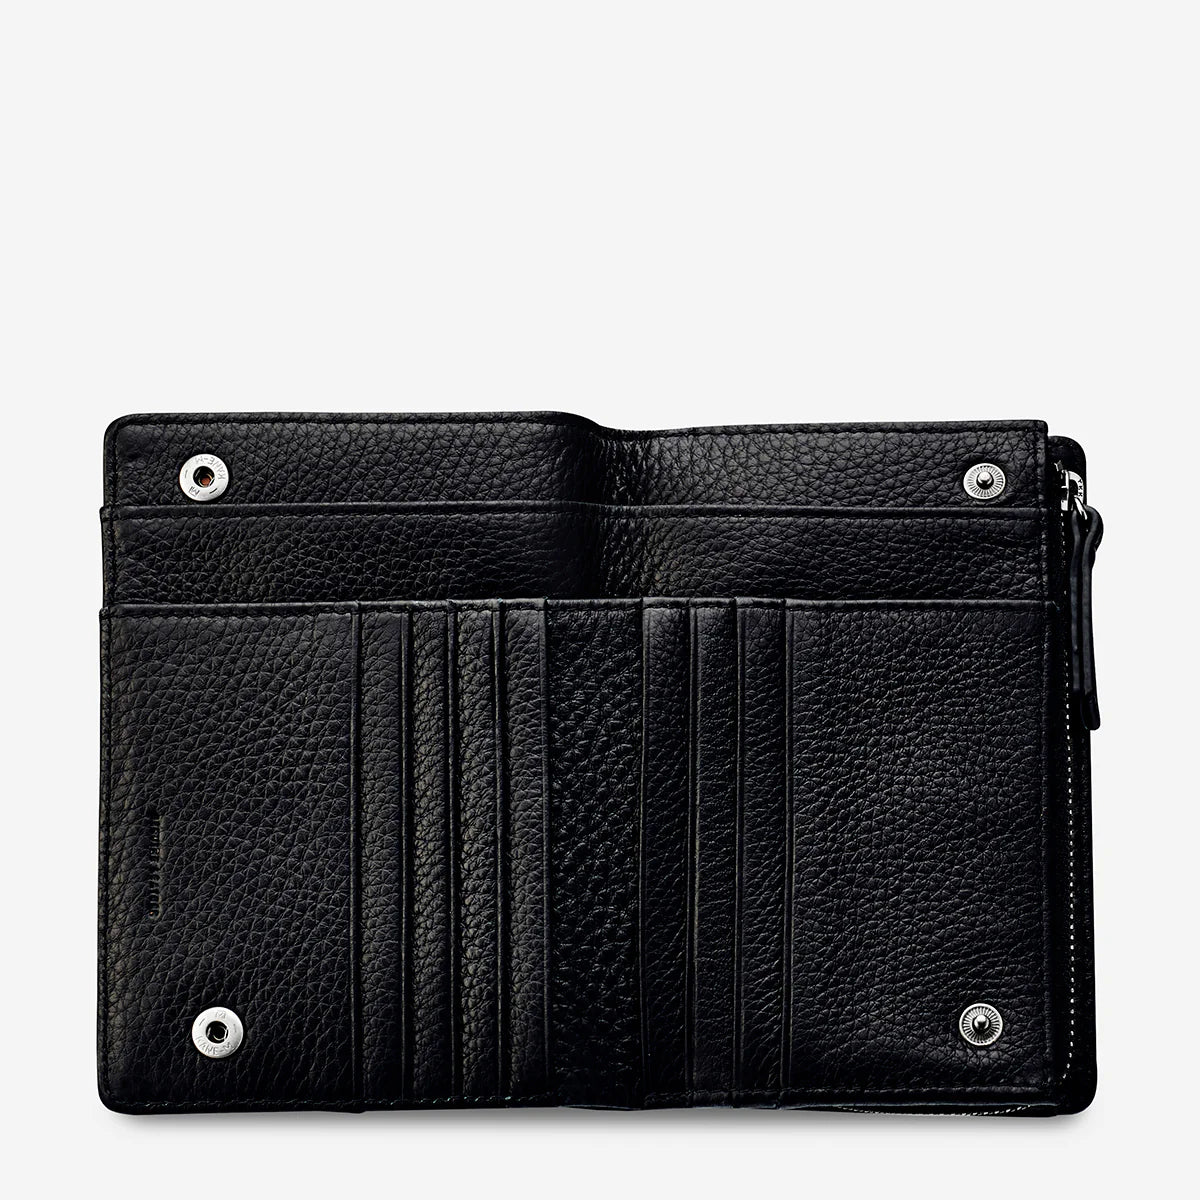 Insurgency Leather Wallet - Black